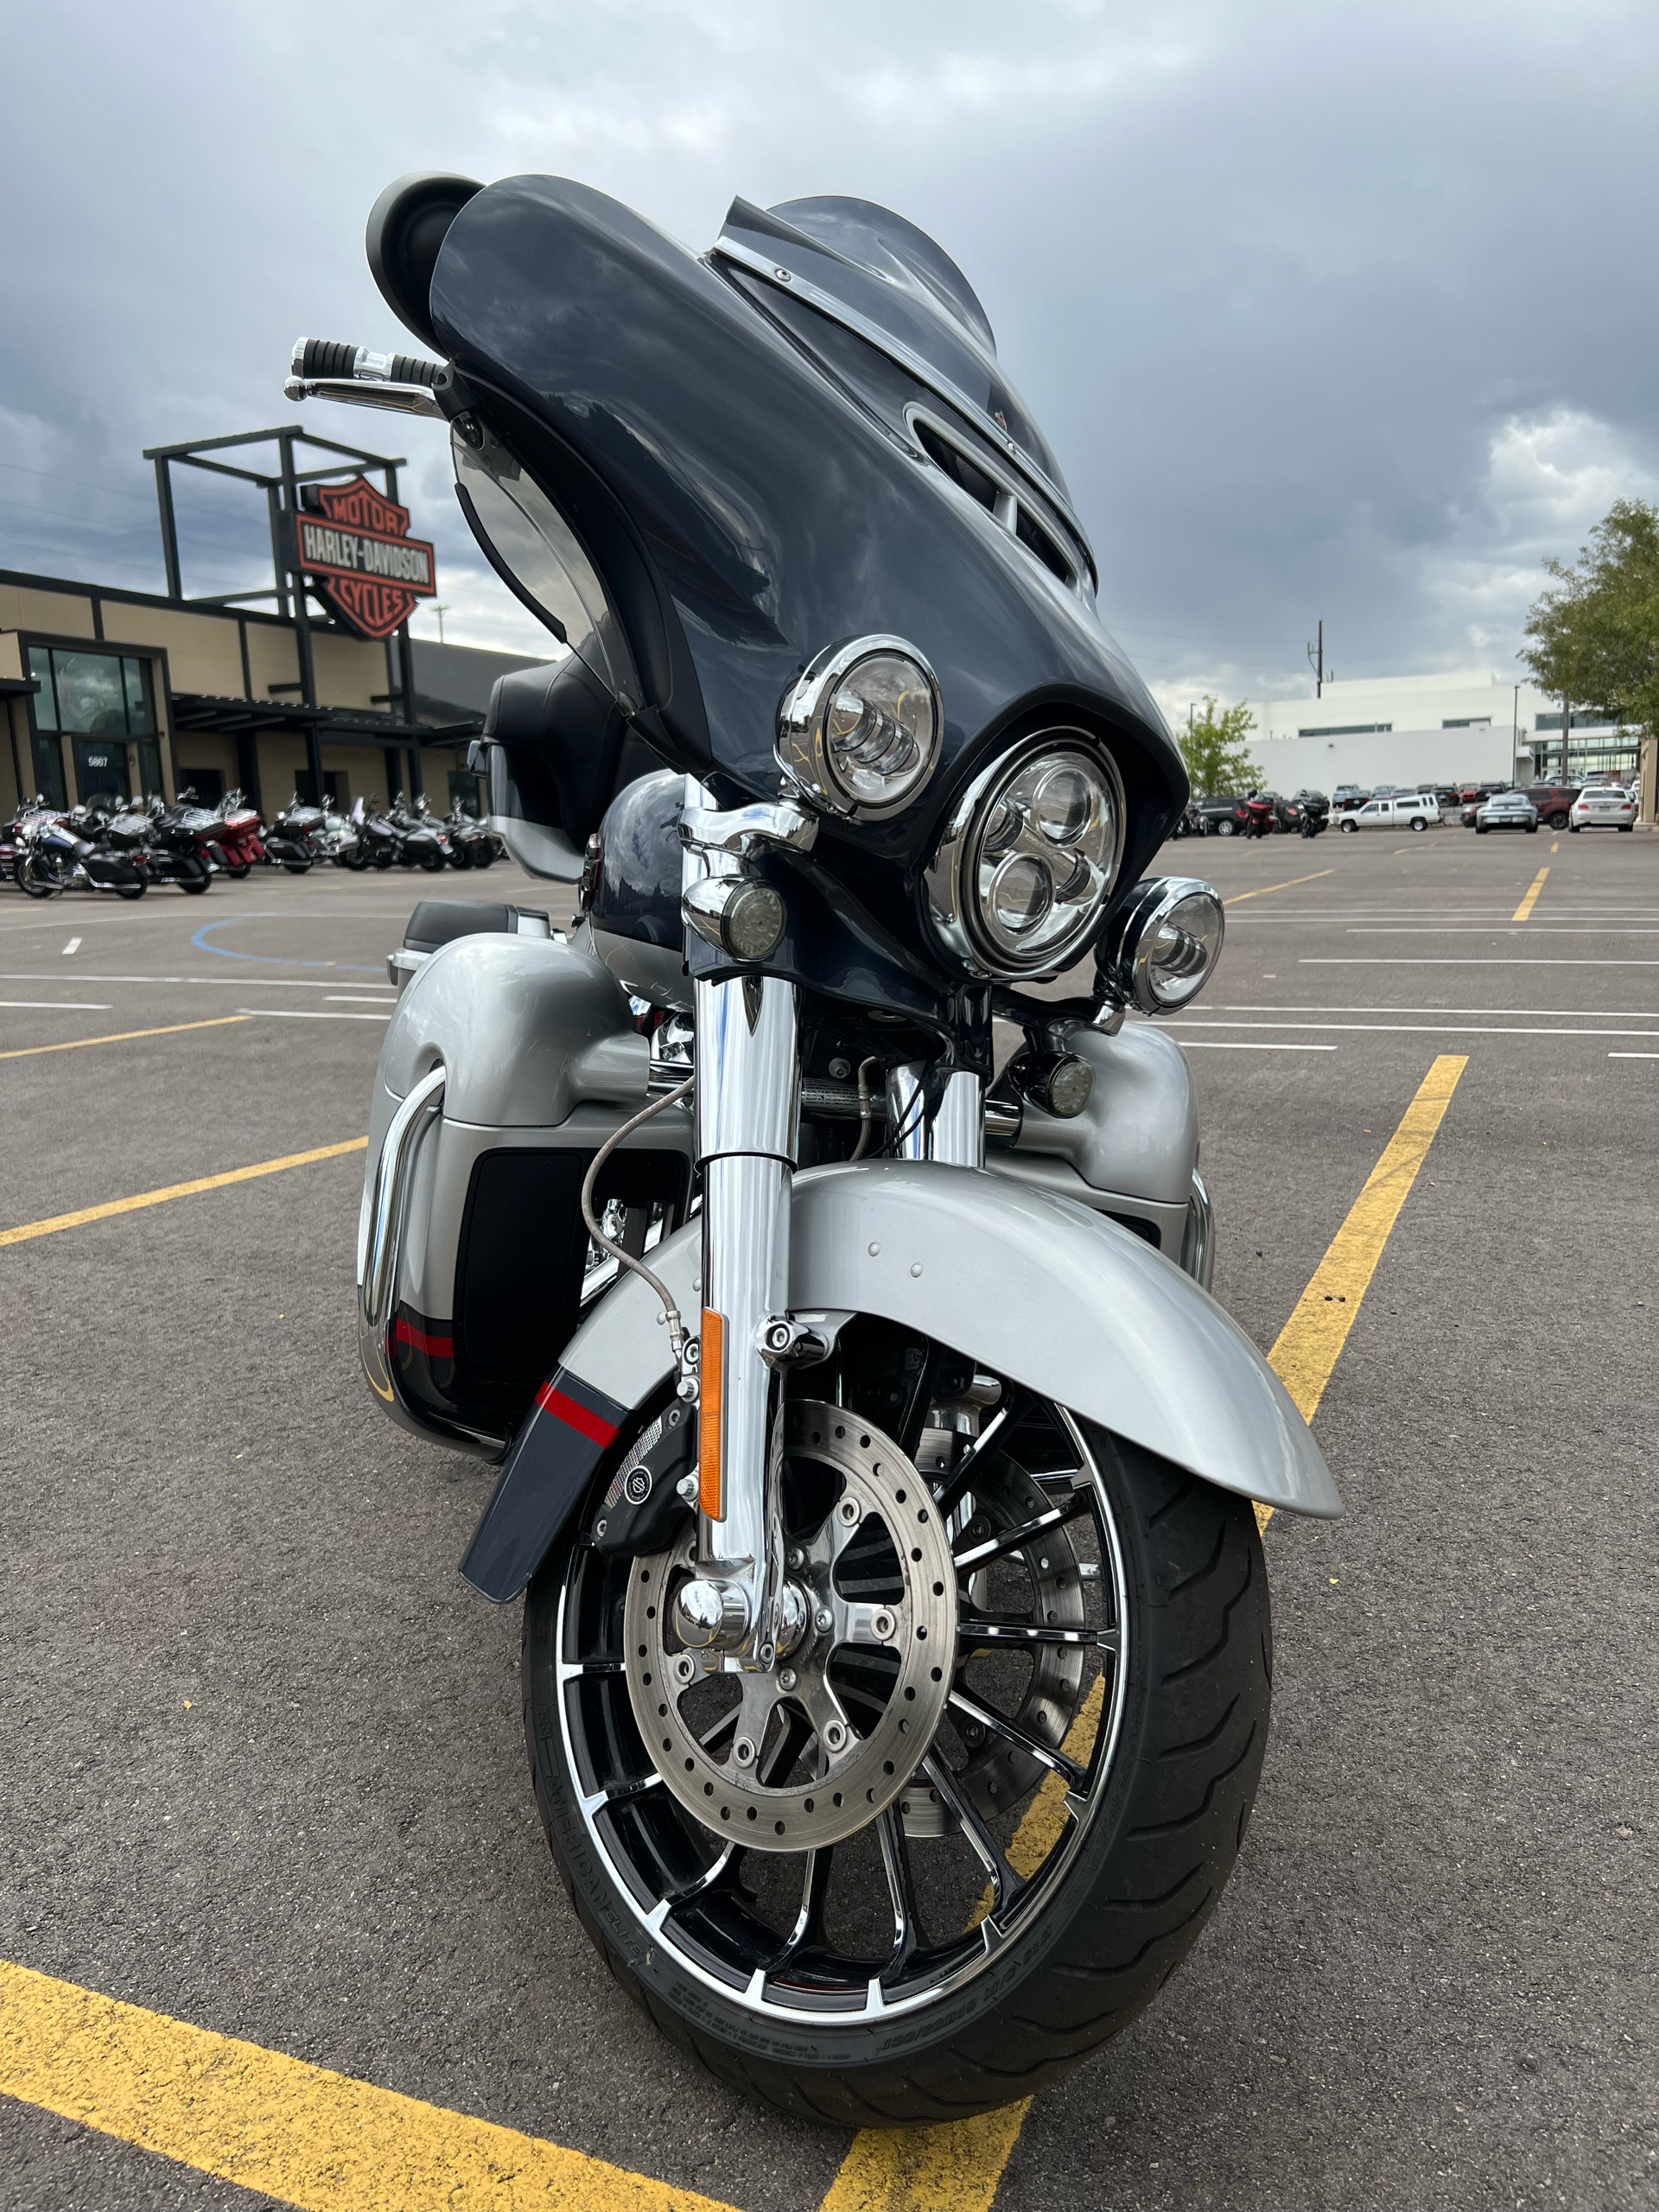 2019 Harley-Davidson CVO™ Street Glide® in Colorado Springs, Colorado - Photo 5